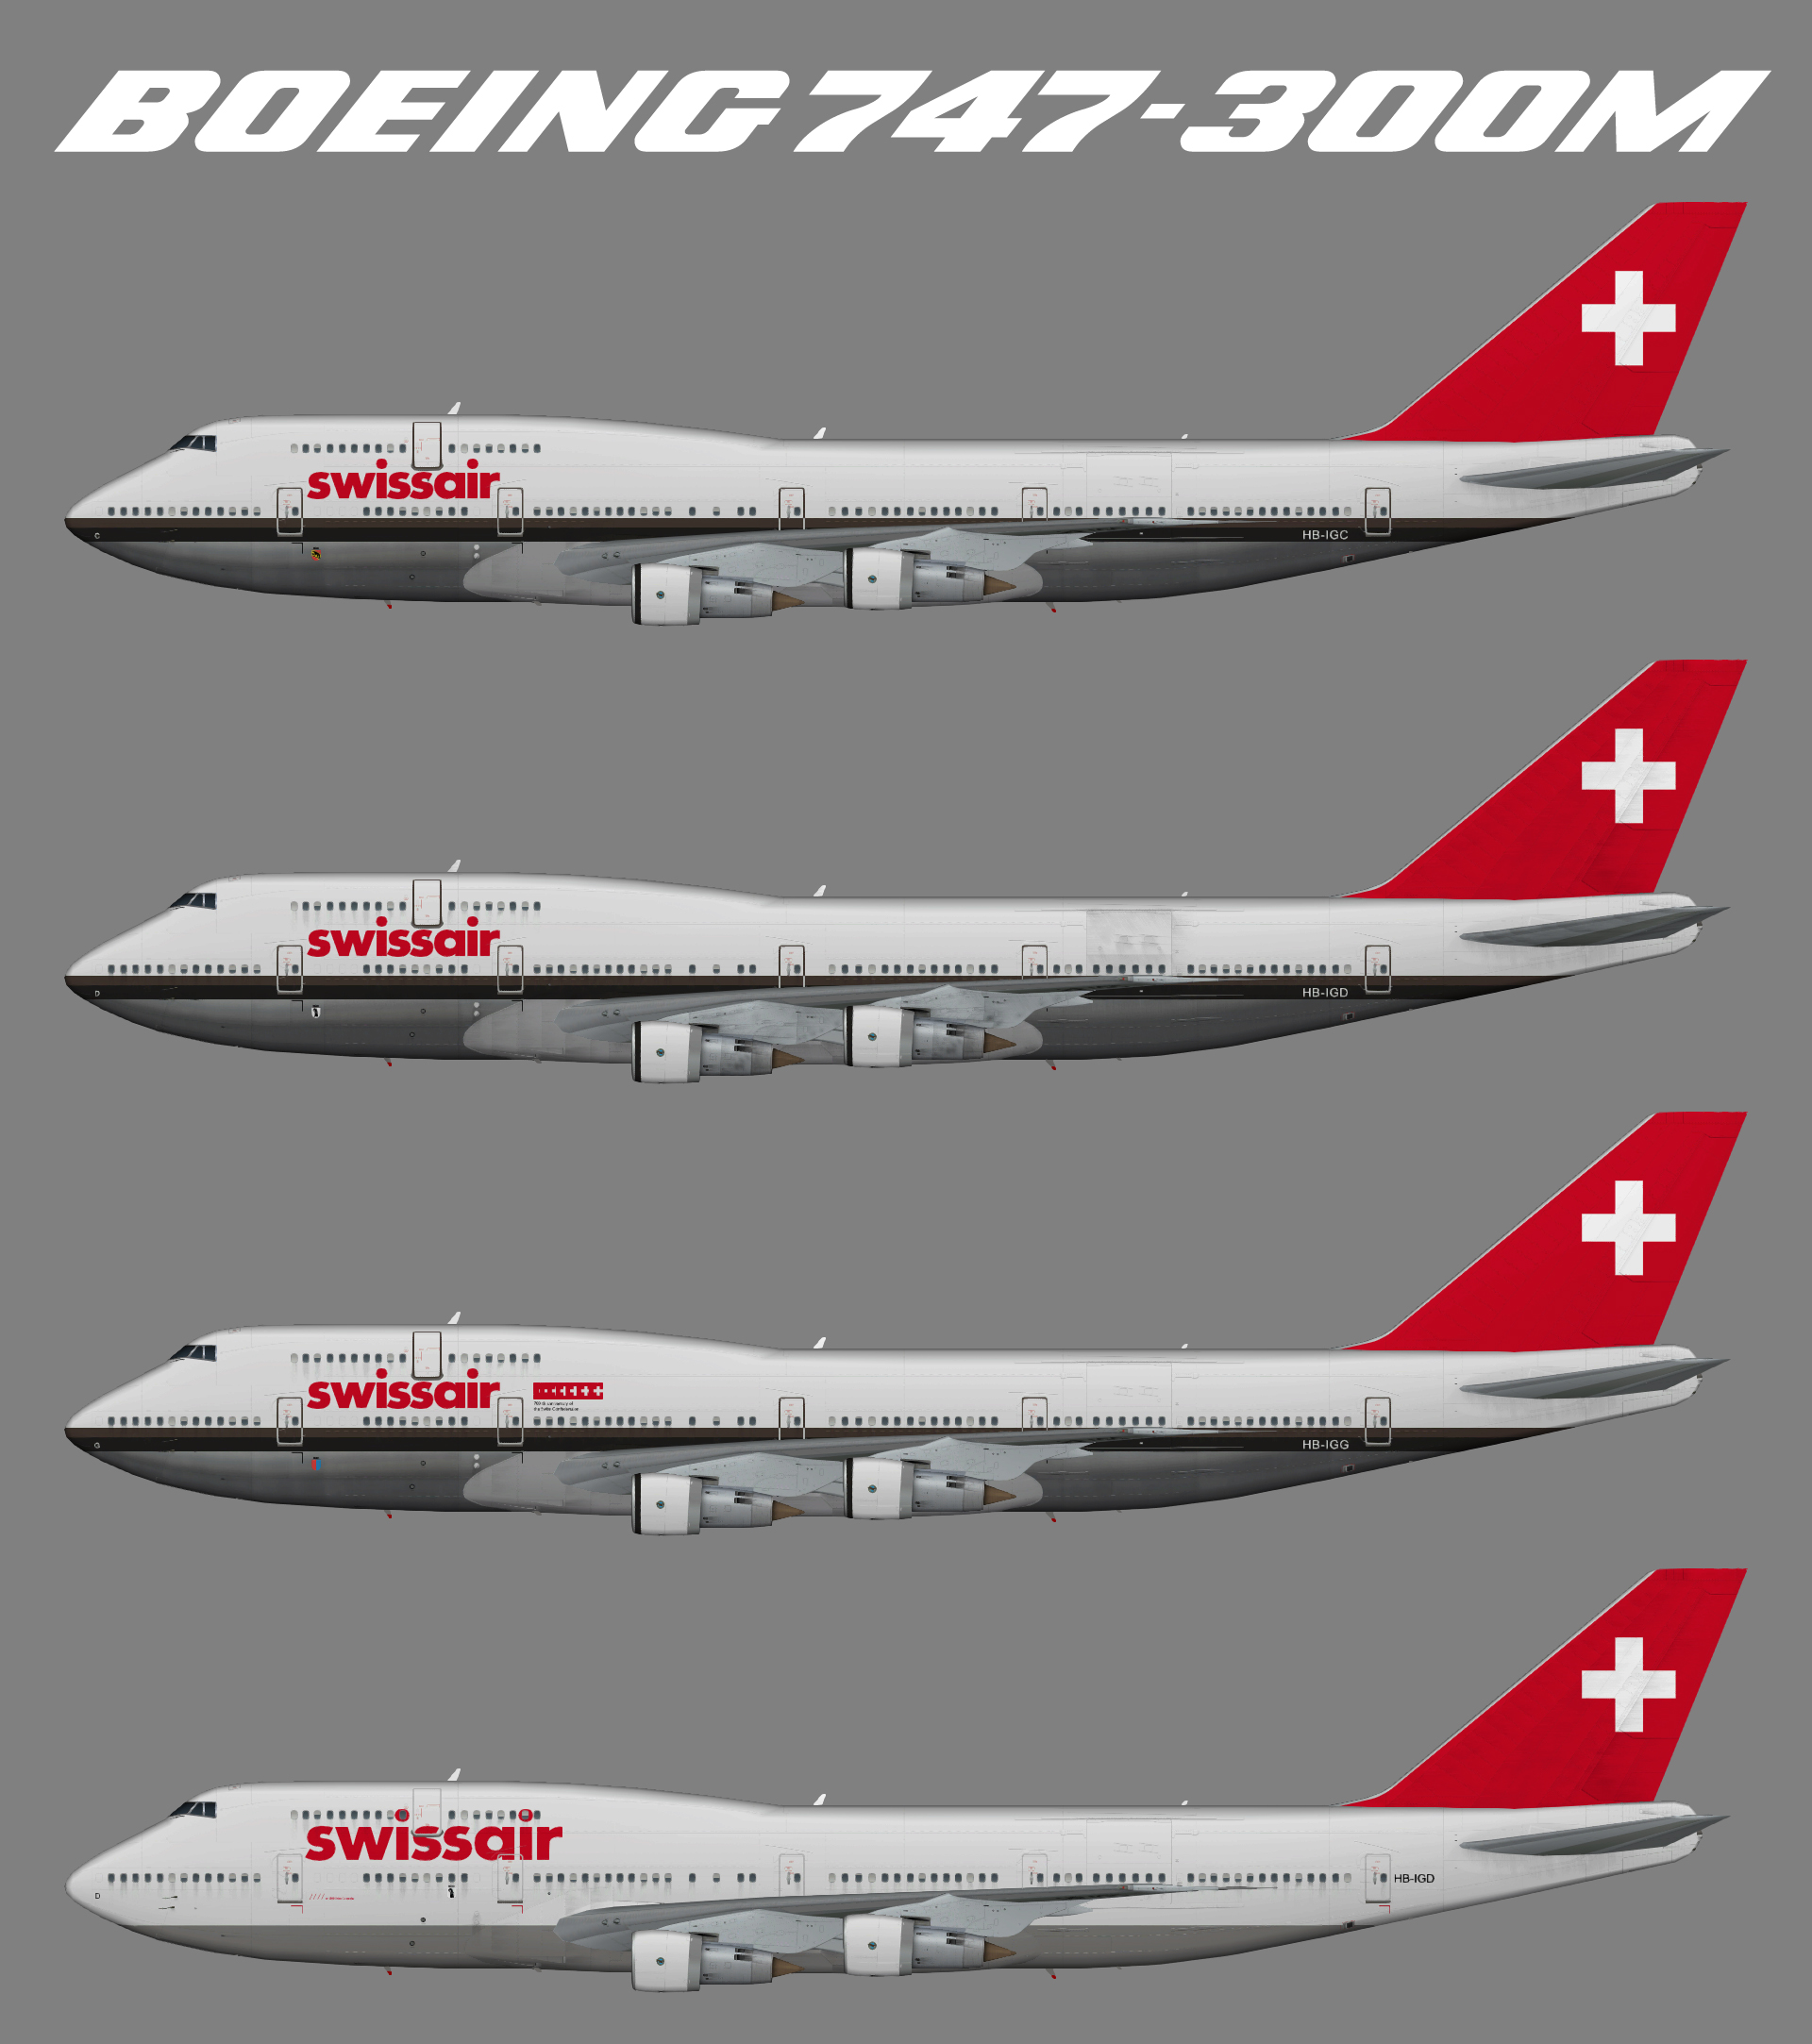 Swissair Boeing 747-300M (Combi)